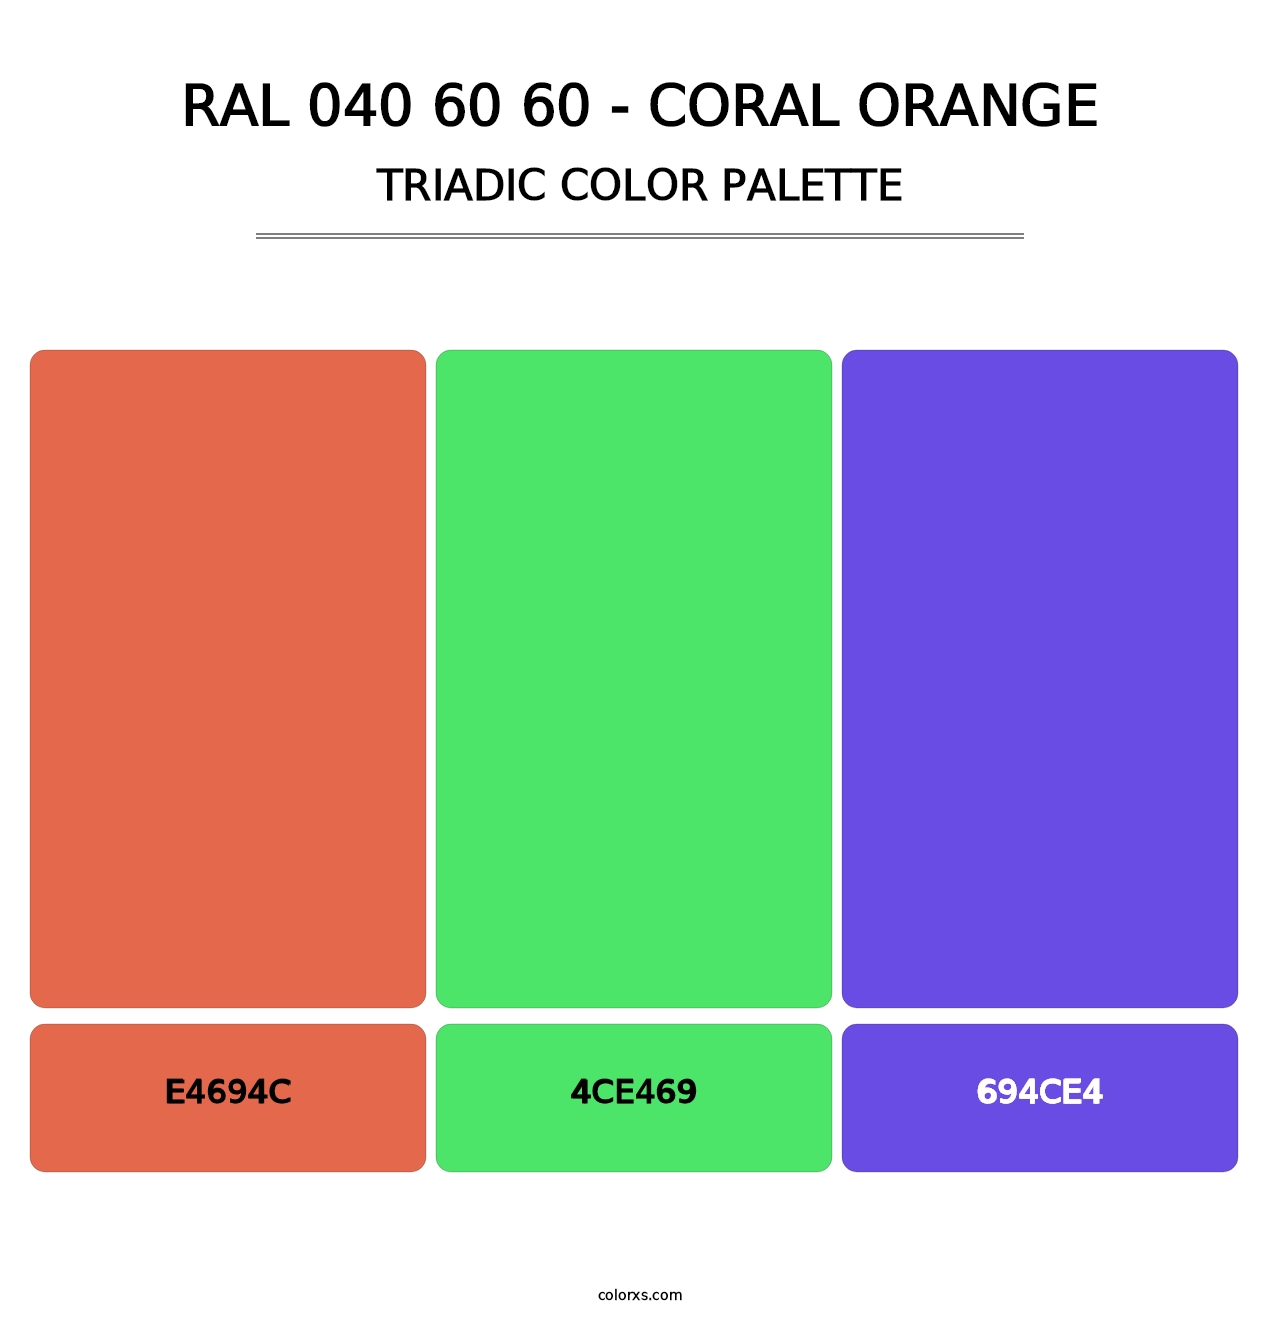 RAL 040 60 60 - Coral Orange - Triadic Color Palette